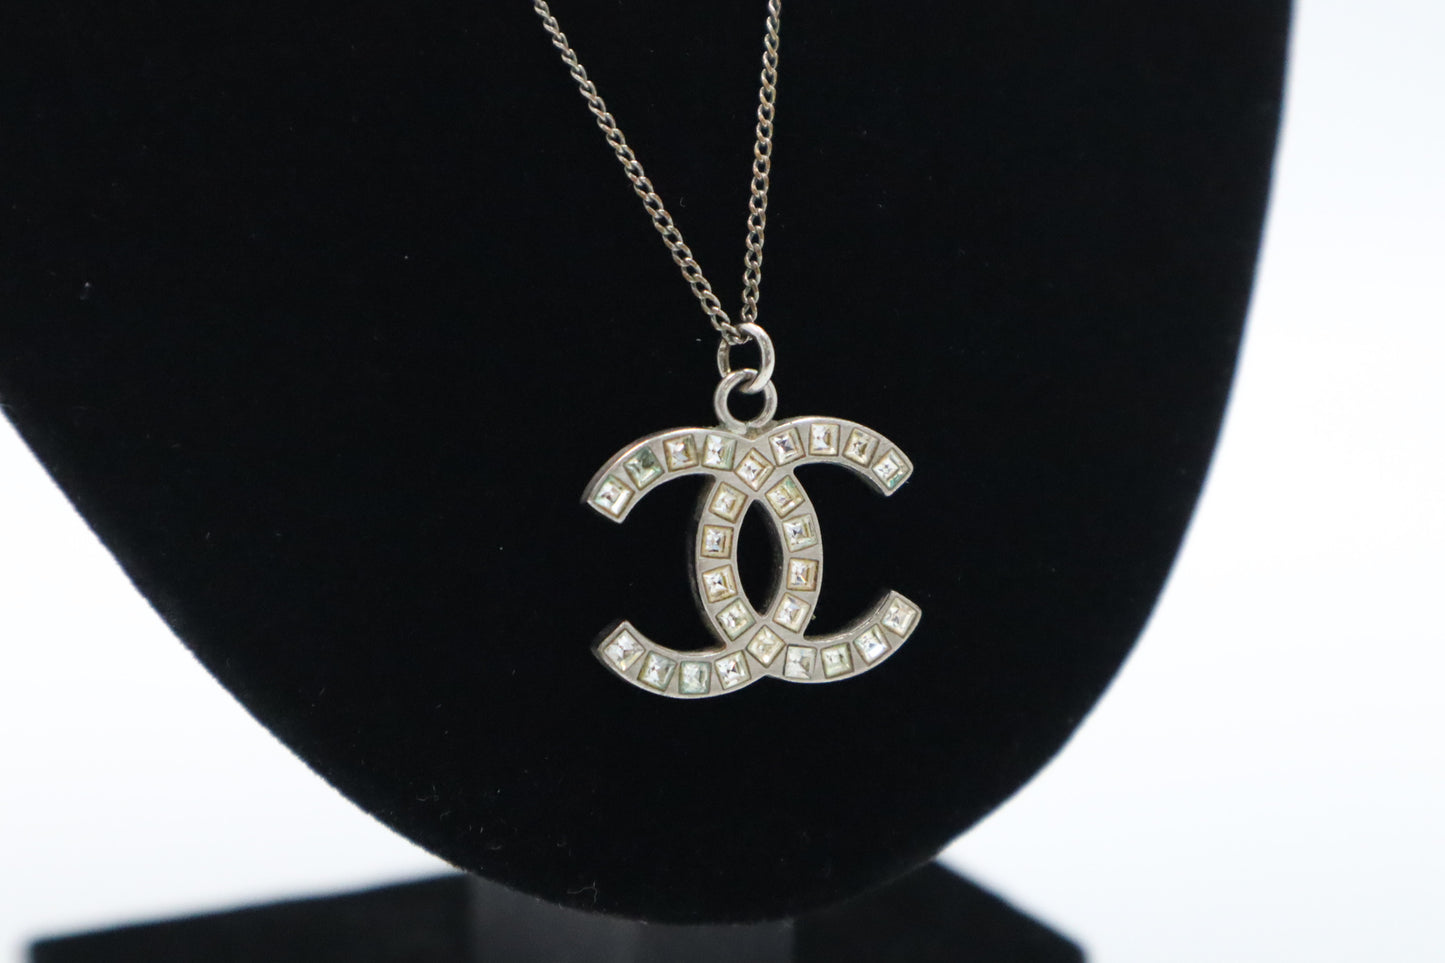 Chanel CC Necklace in Silver Tone